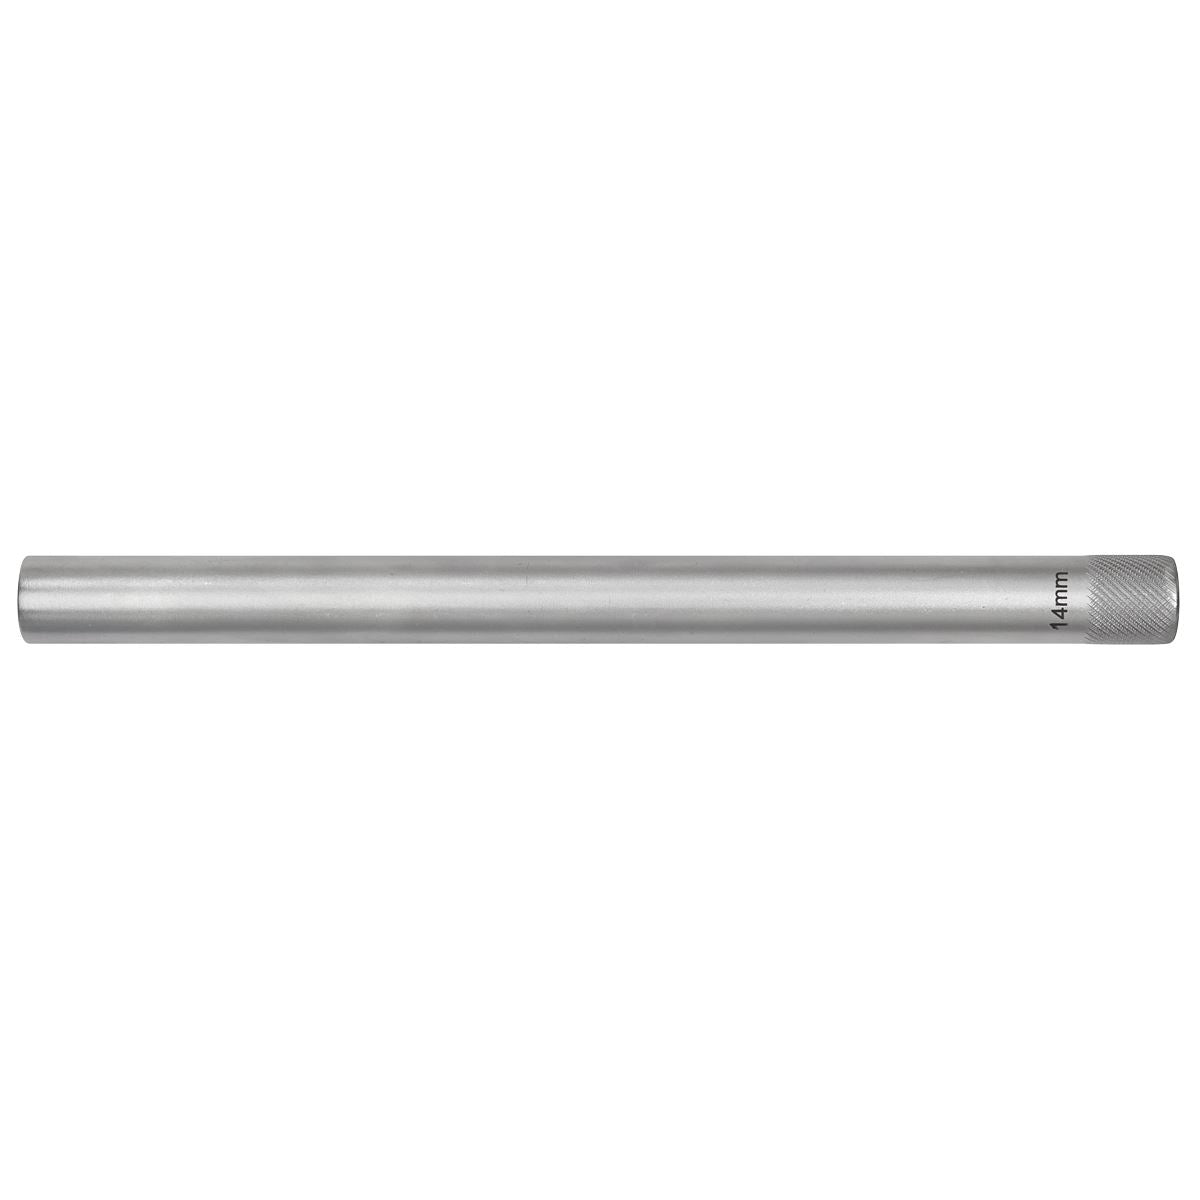 Sealey Spark Plug Socket 14mm 3/8"Sq 12-Point Magnetic Drive 250mm Long